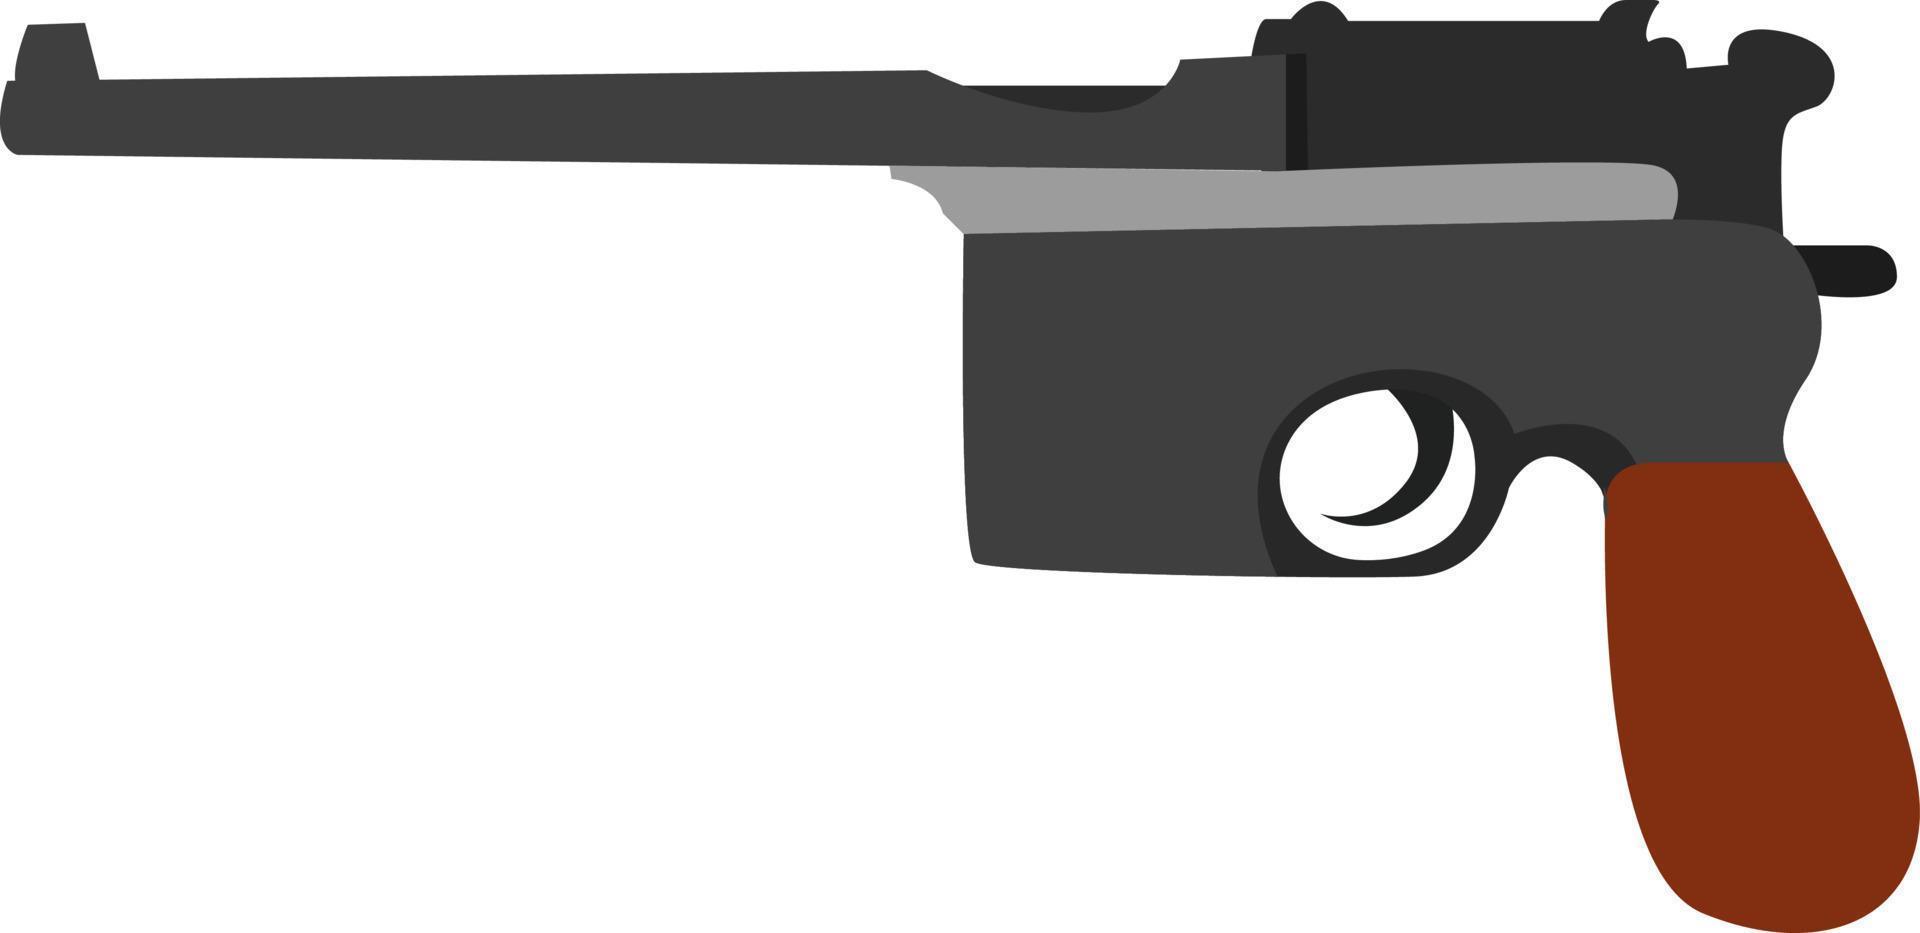 mauser pistol, illustration, vektor på vit bakgrund.